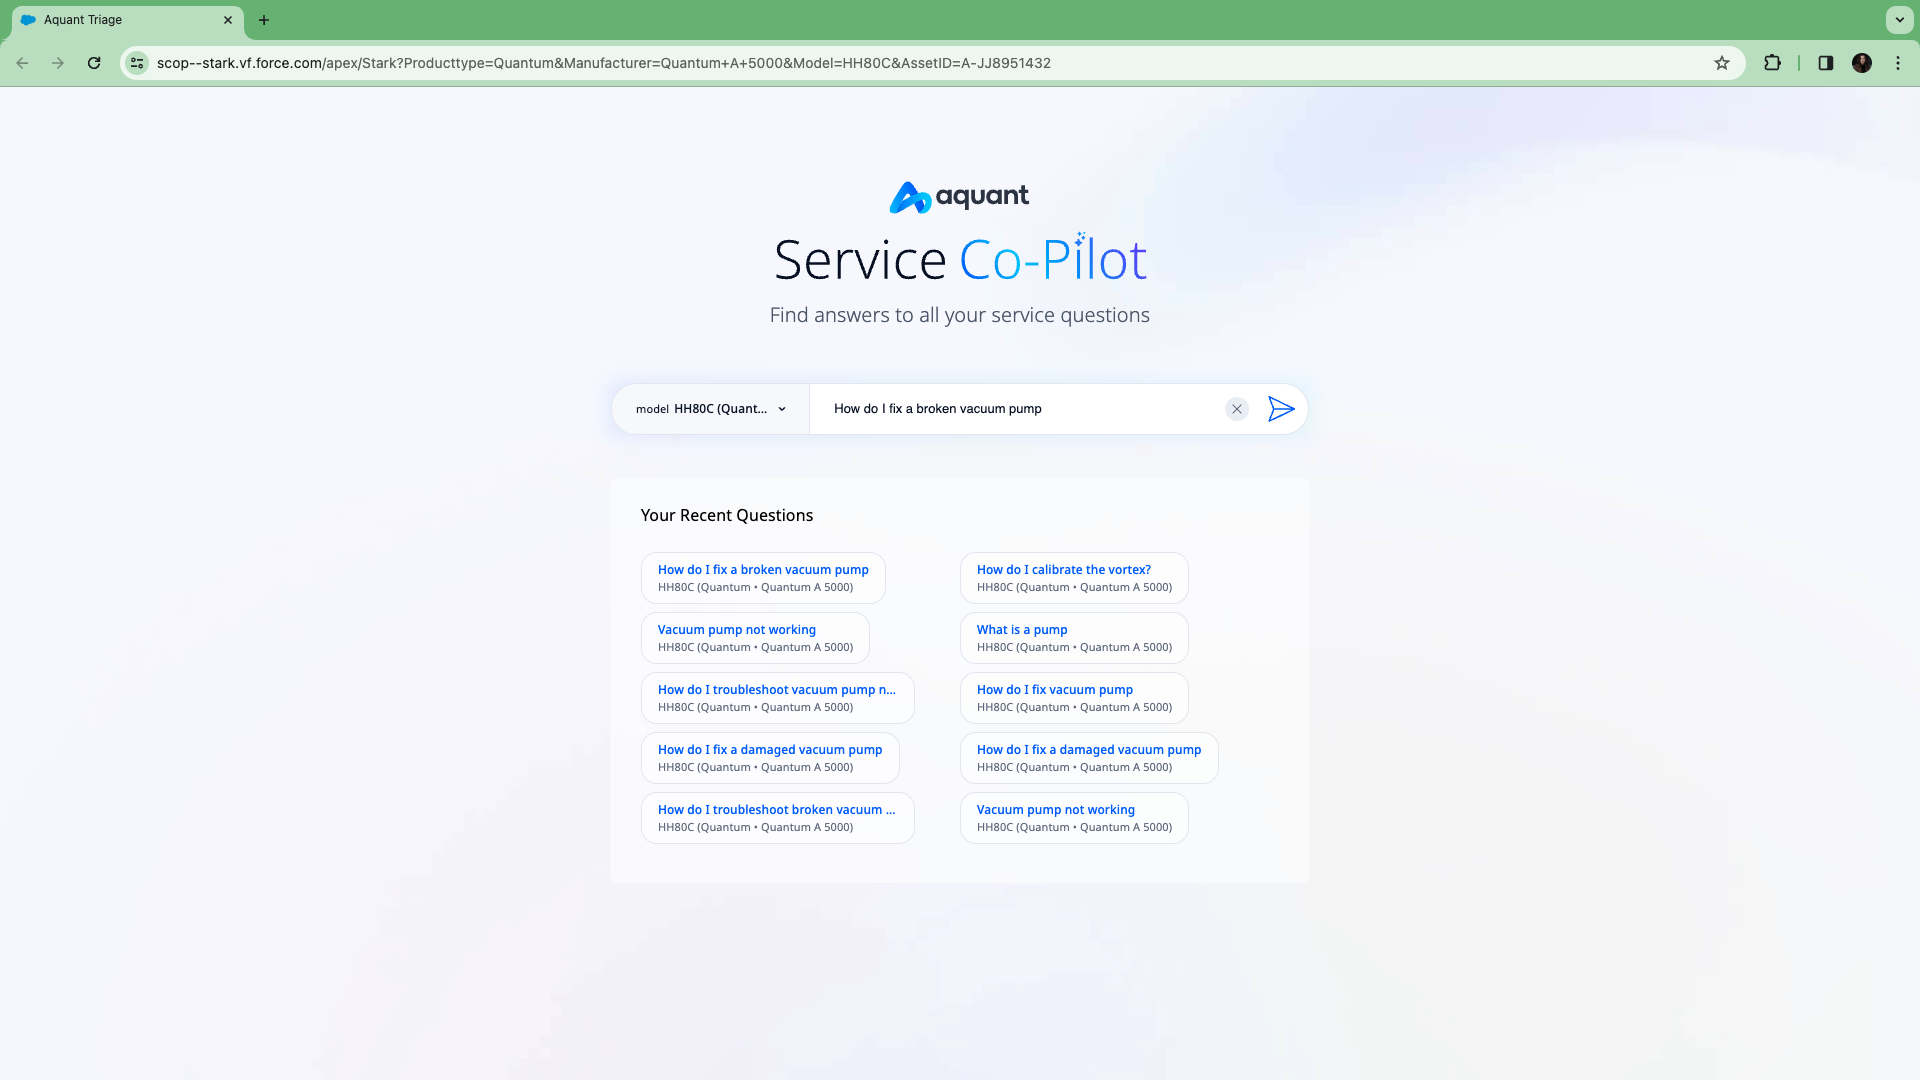 Aquant Service Co-Pilot - Knowledge Search